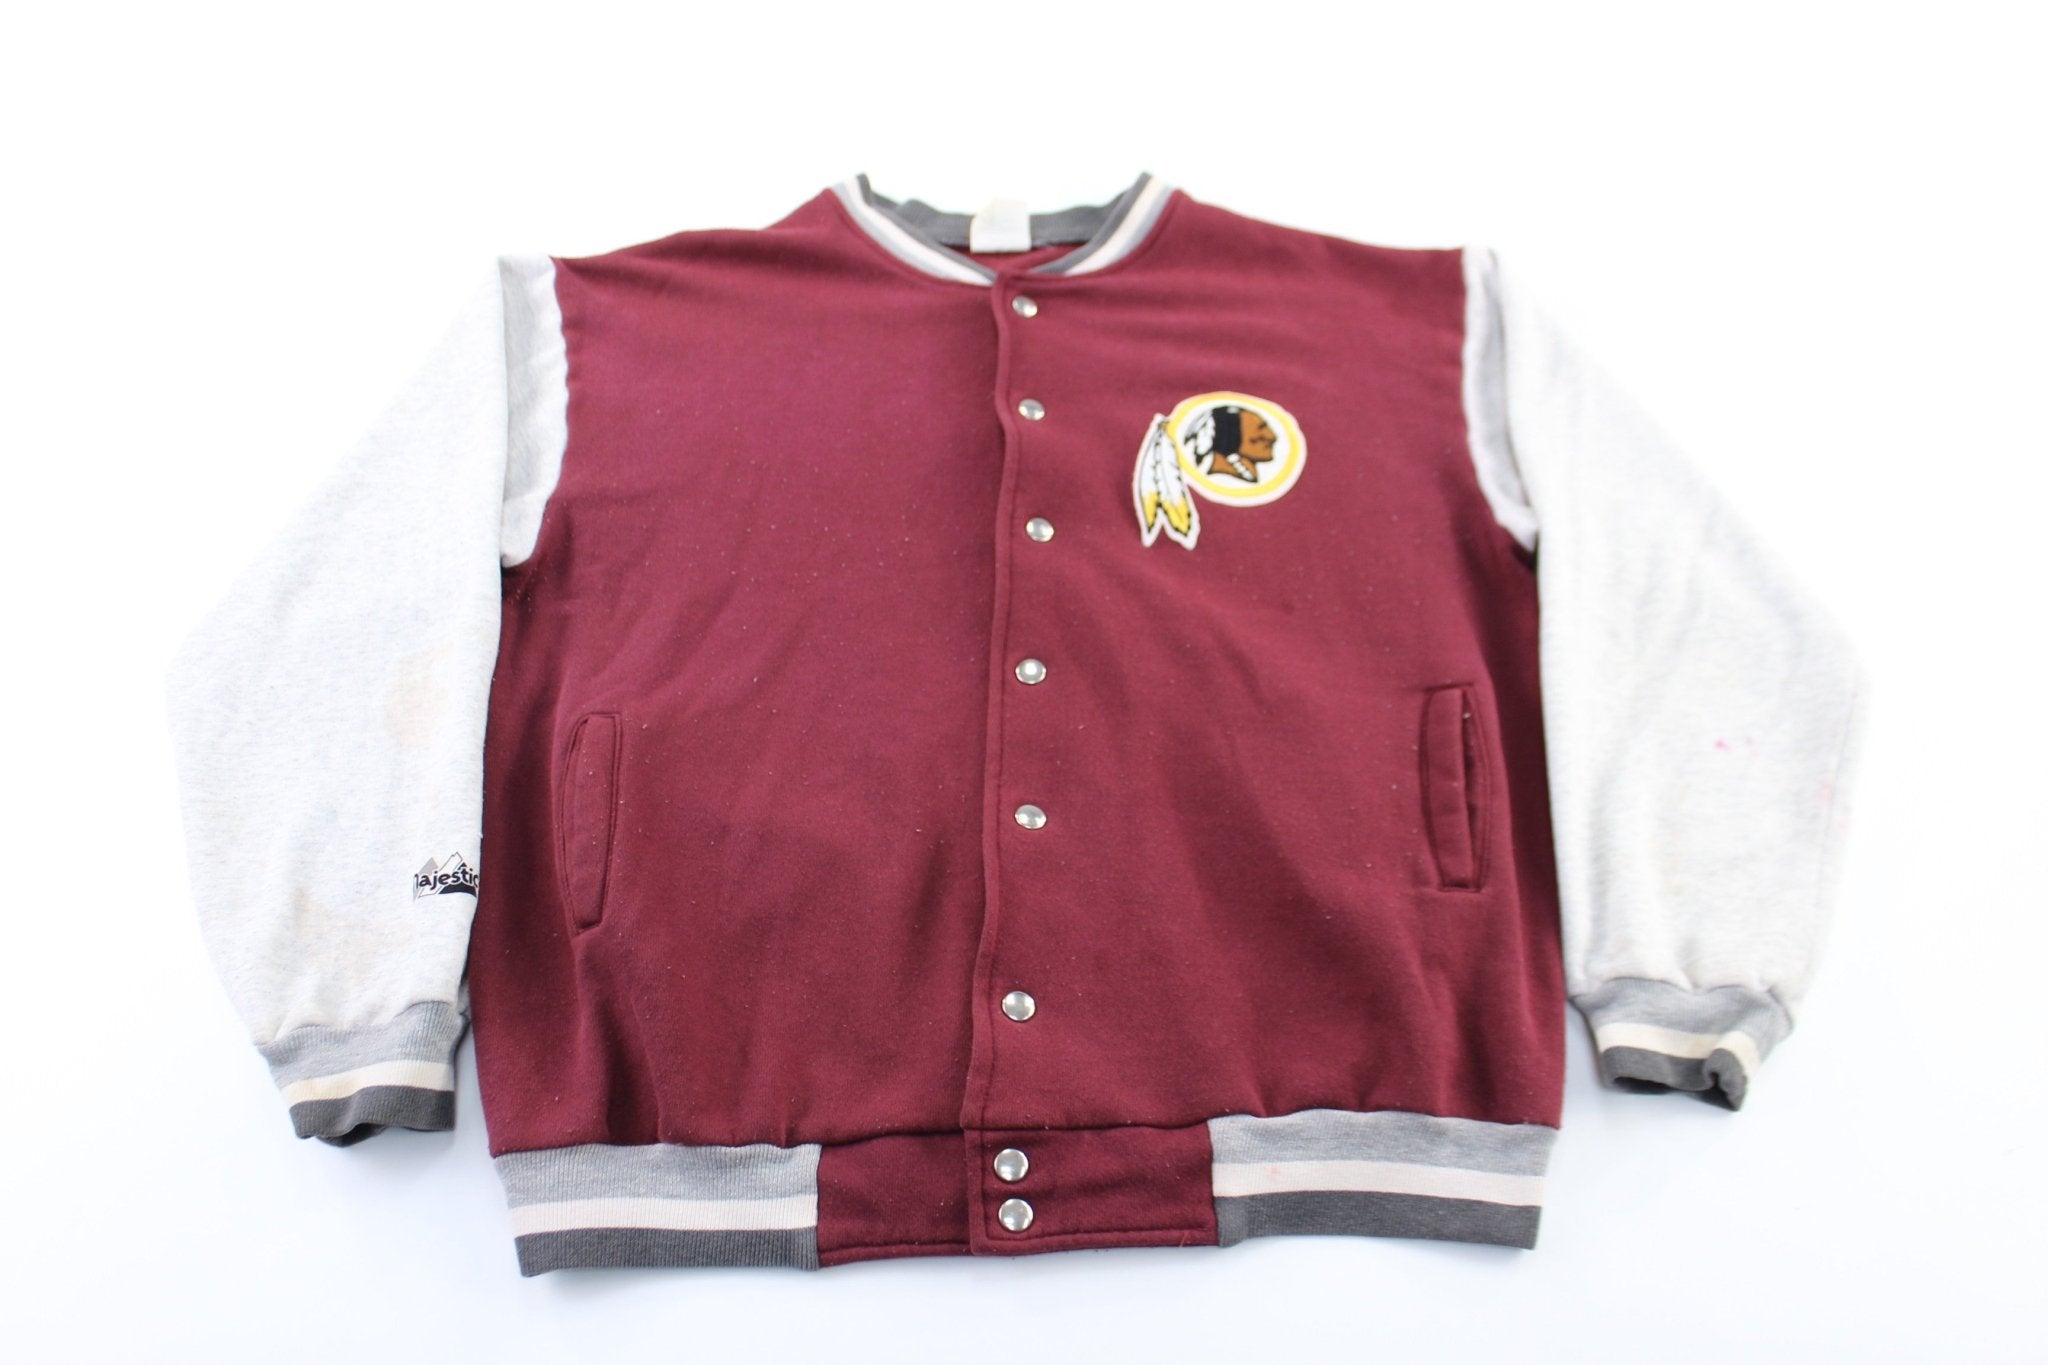 Majestic Washington Redskins Burgundy & Grey Varsity Jacket - ThriftedThreads.com